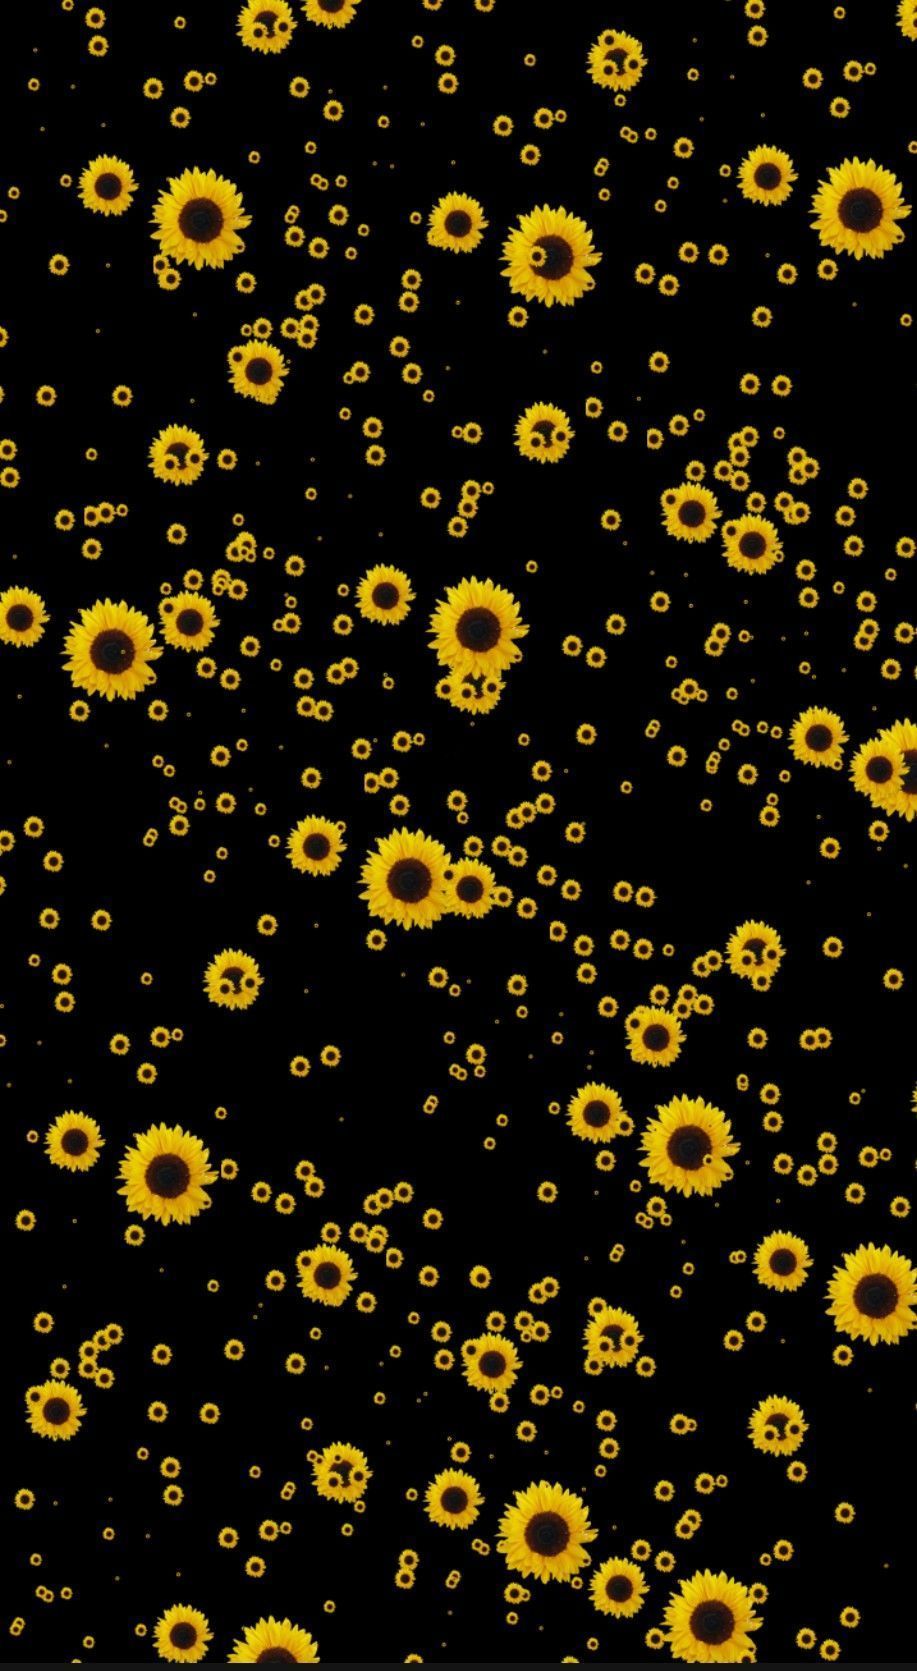 Aesthetic sunflower wallpaper for your phone or desktop background. - Emoji